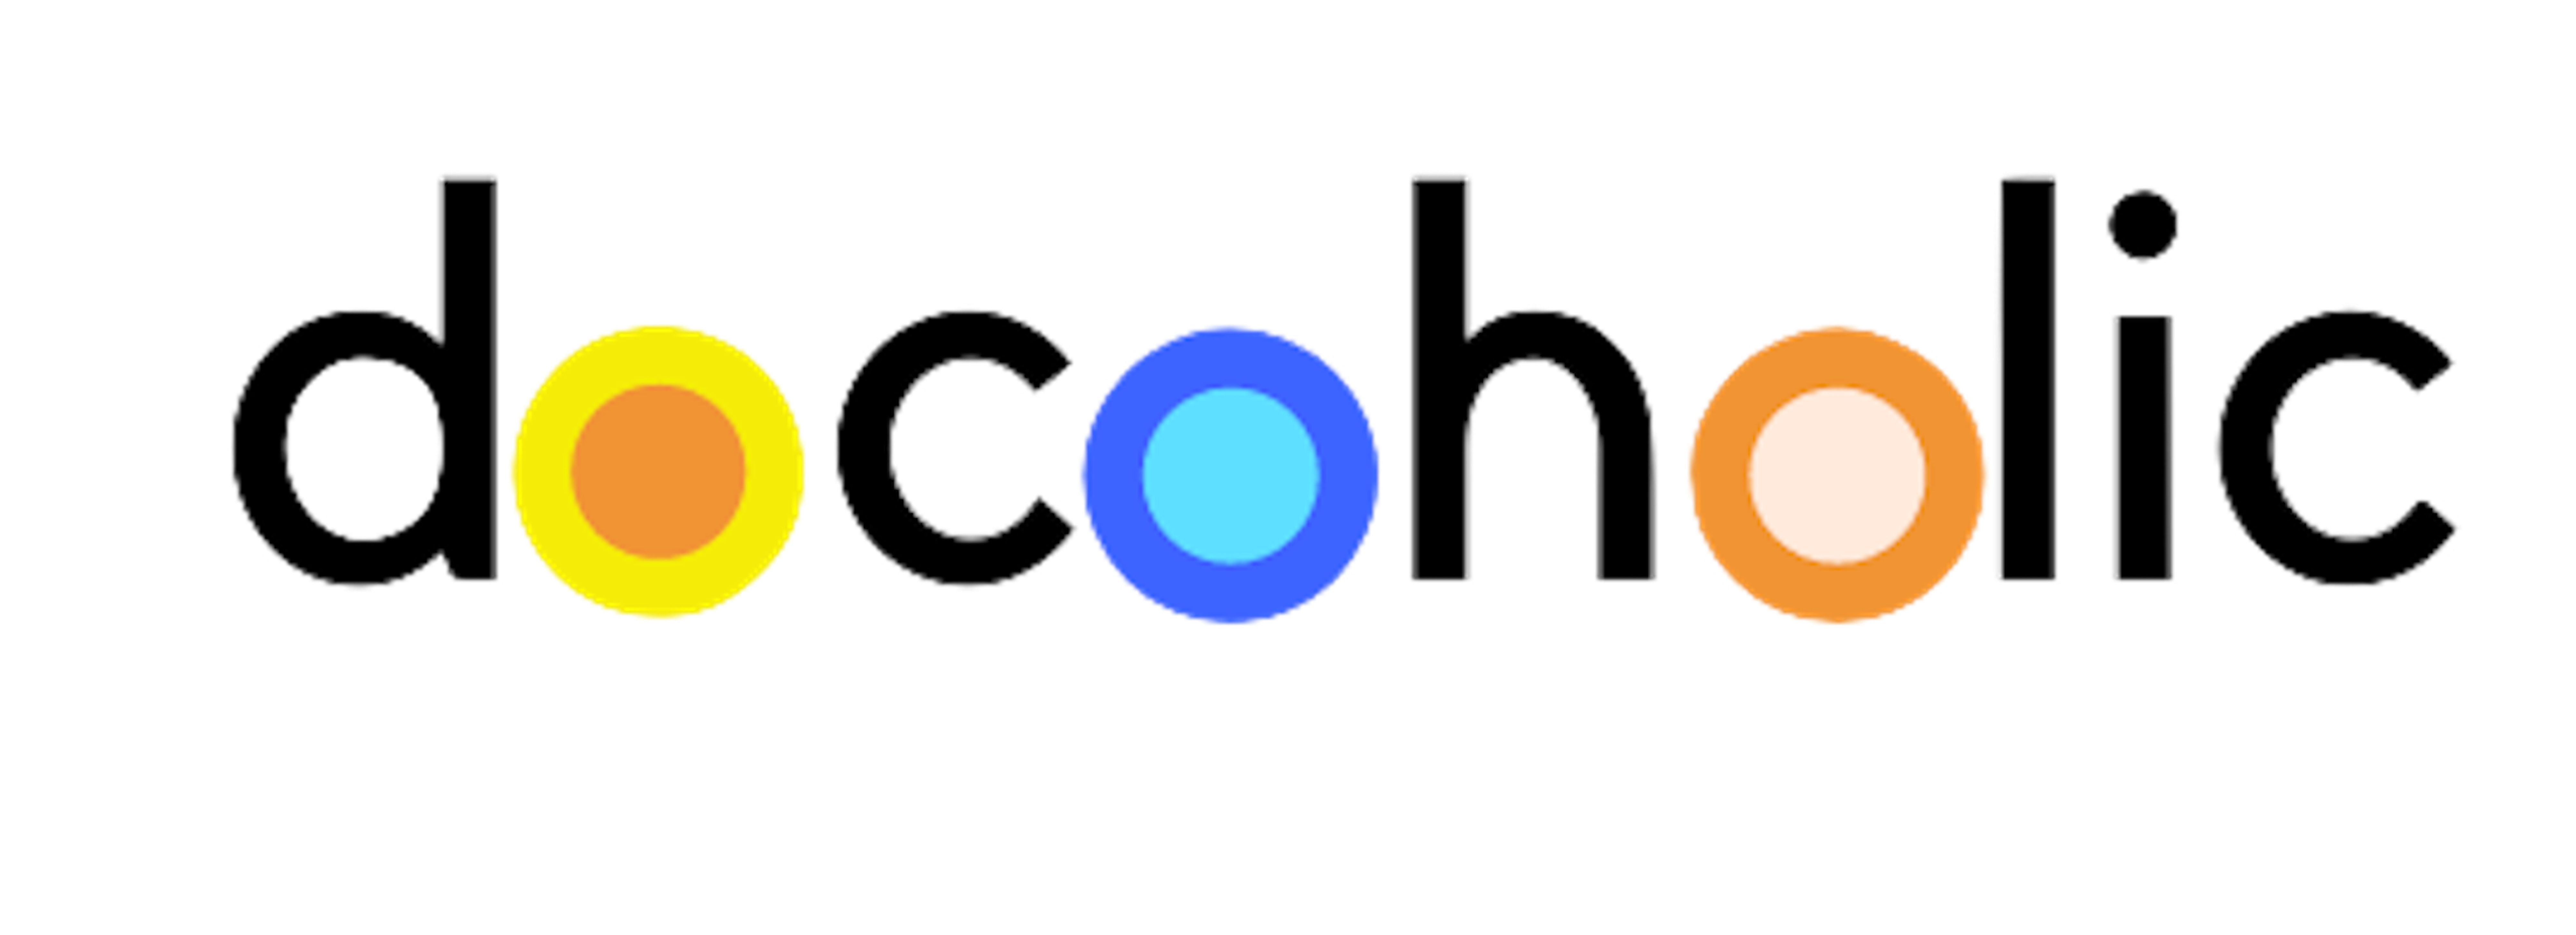 Docoholic - Shipment Collaboration platform